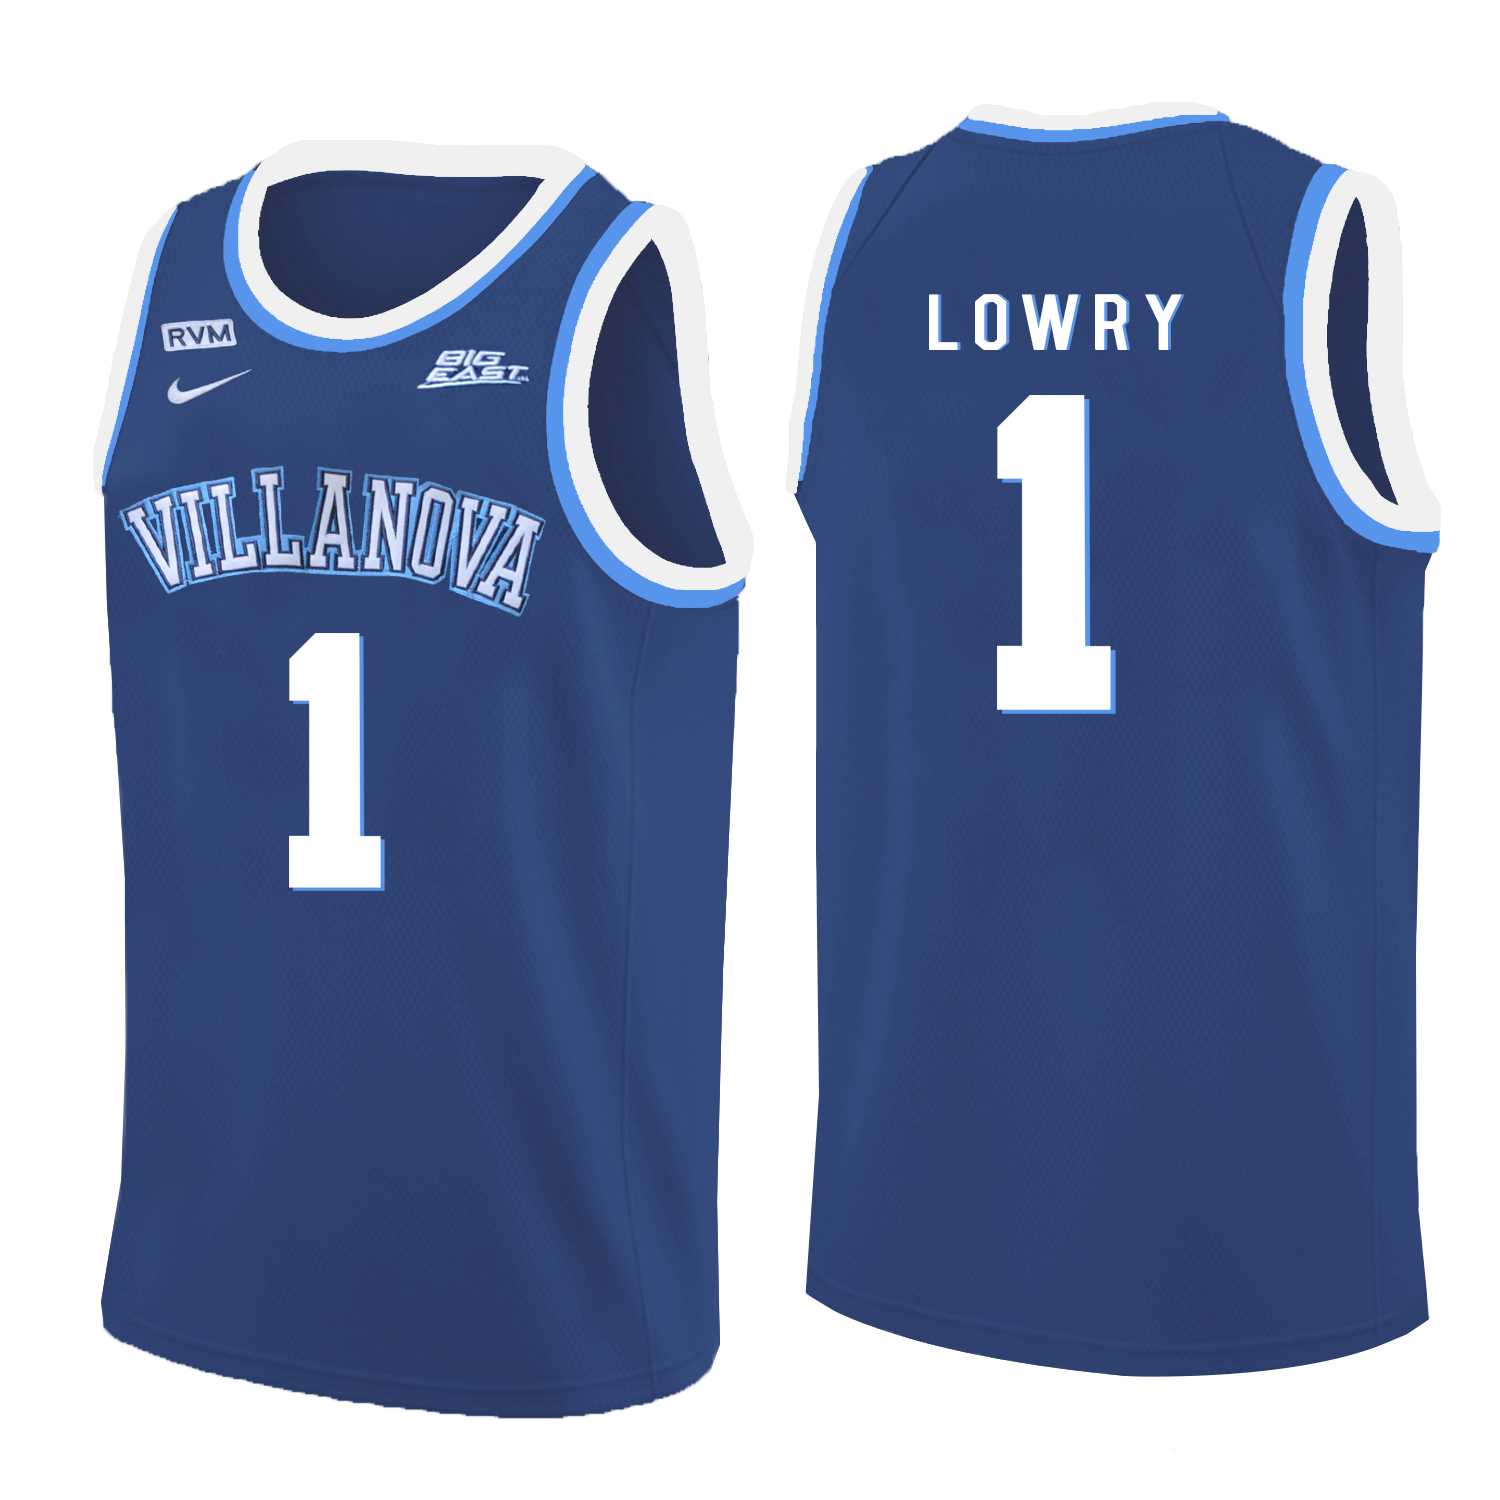 Villanova Wildcats #1 Kyle Lowry Blue College Basketball Jersey